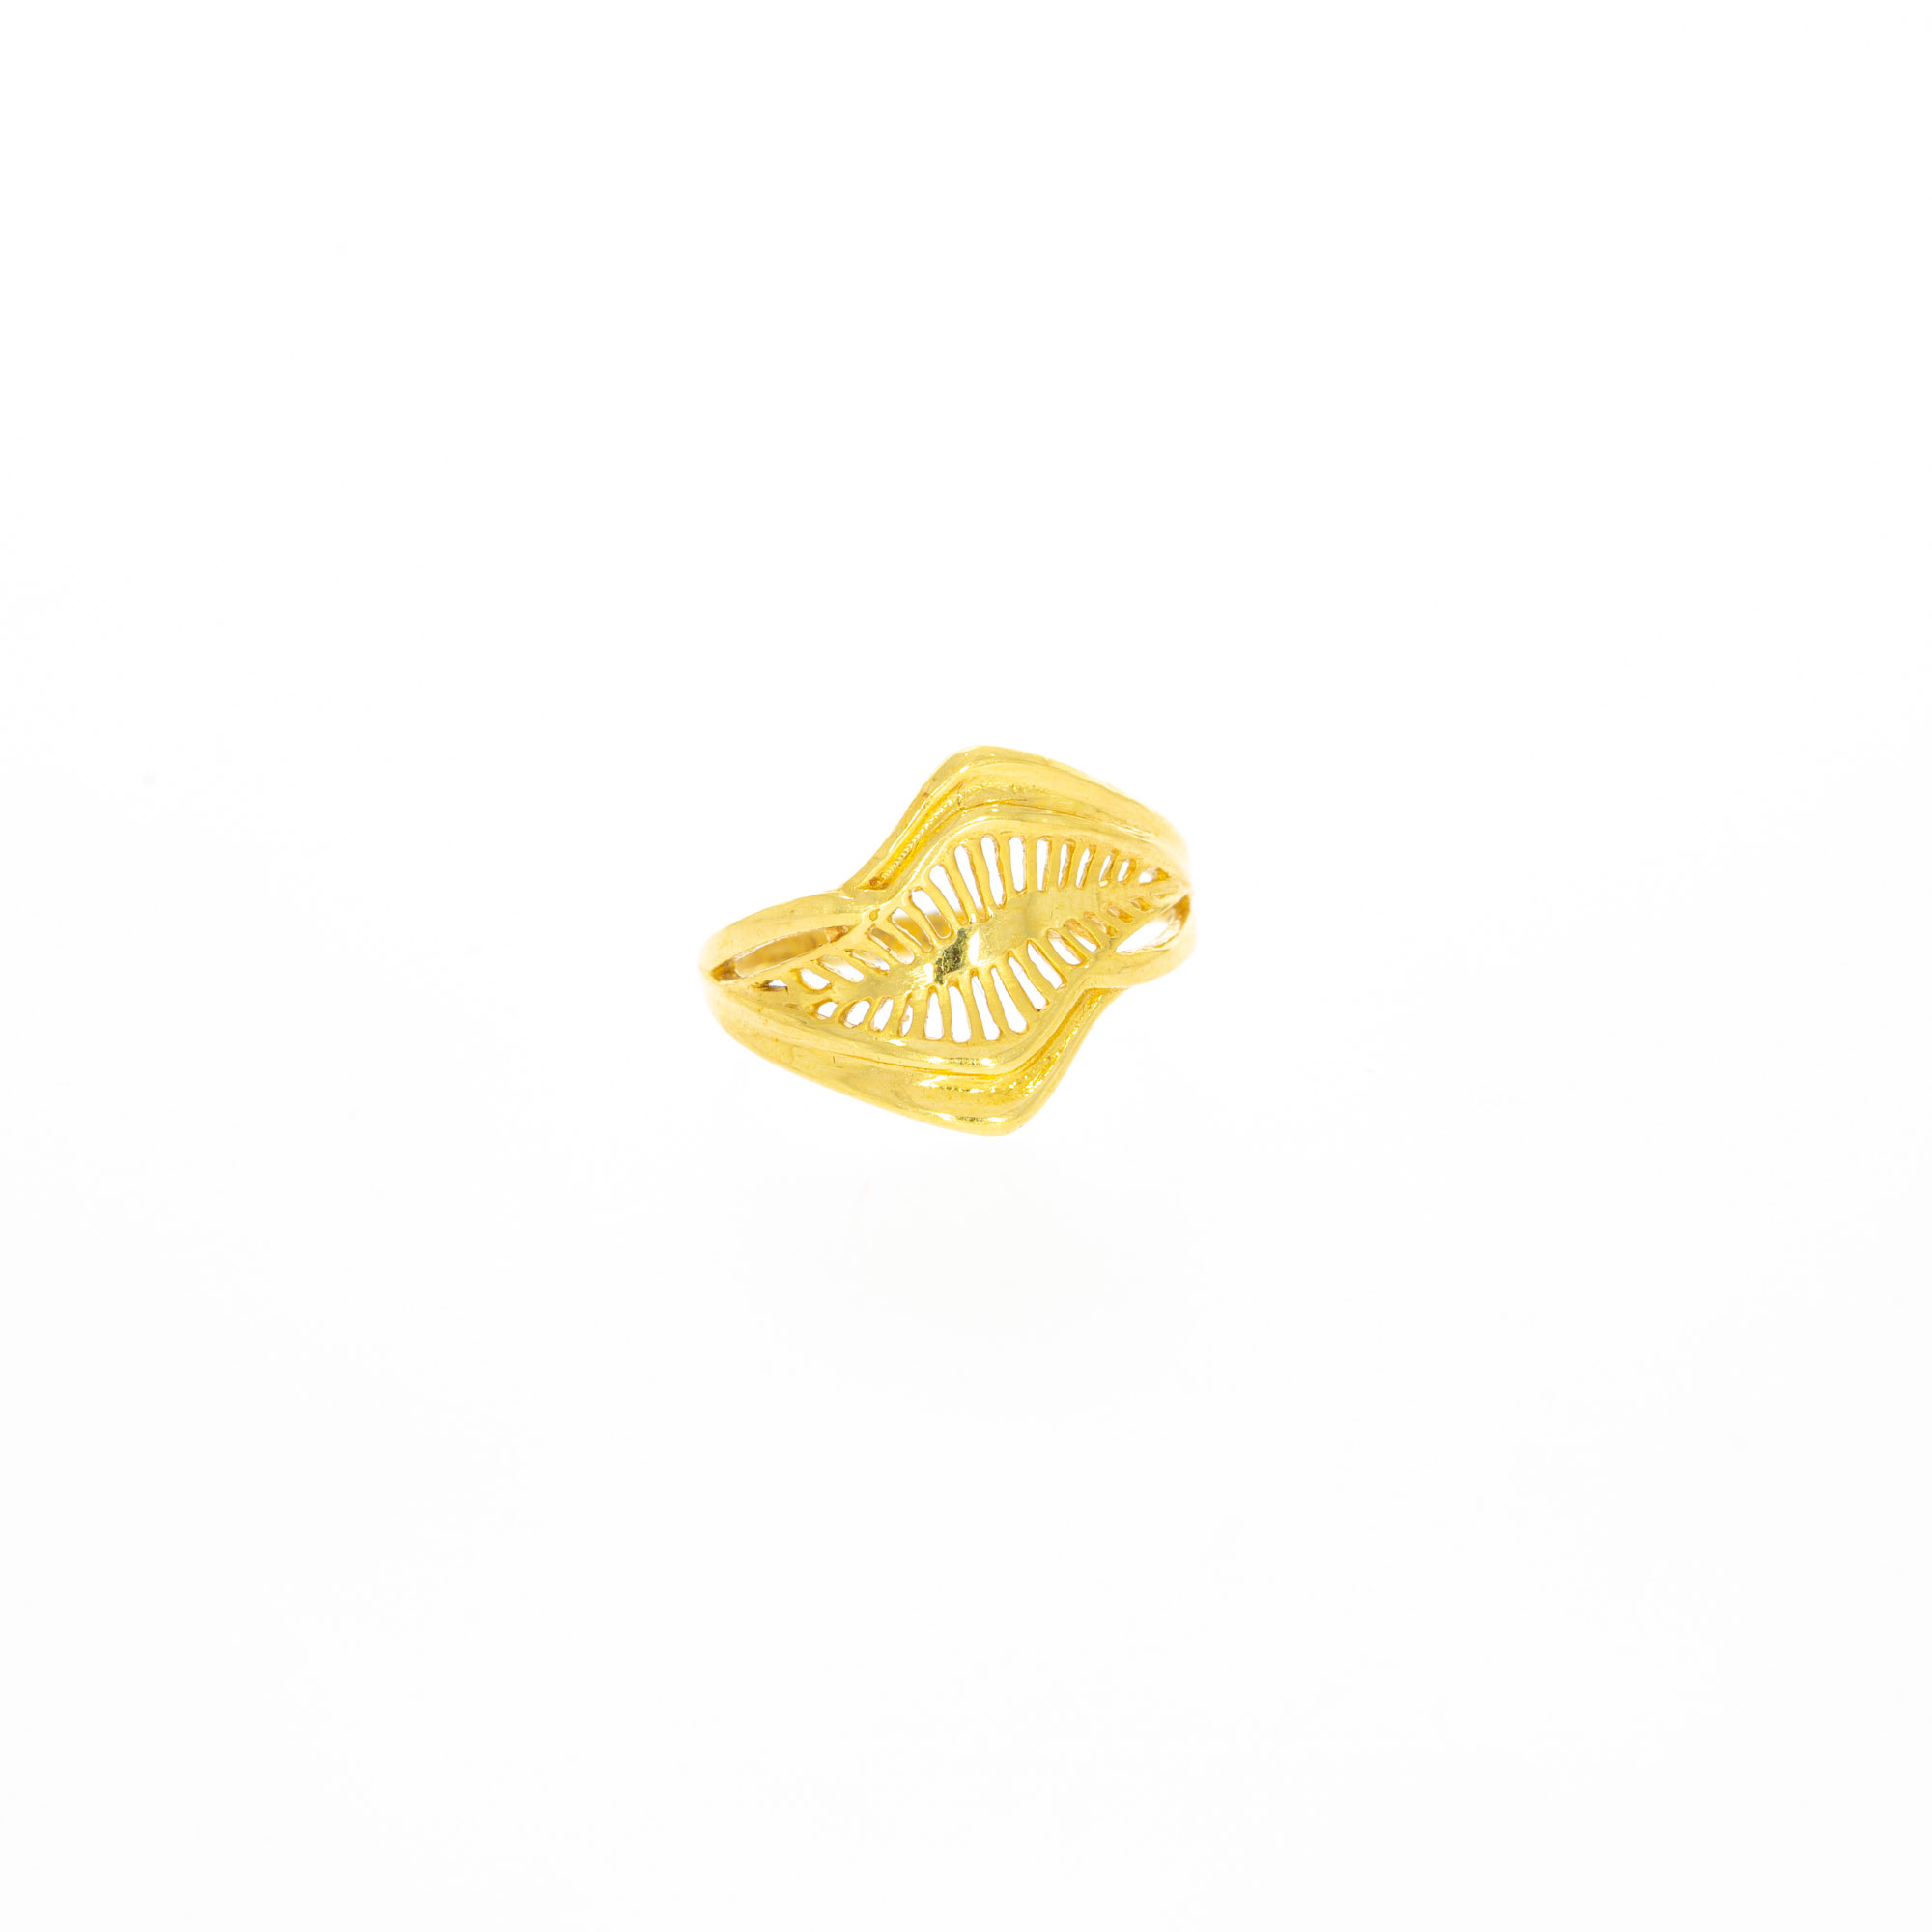 Buy Gold Rings: Stylish & Simple Designs For Men & Women